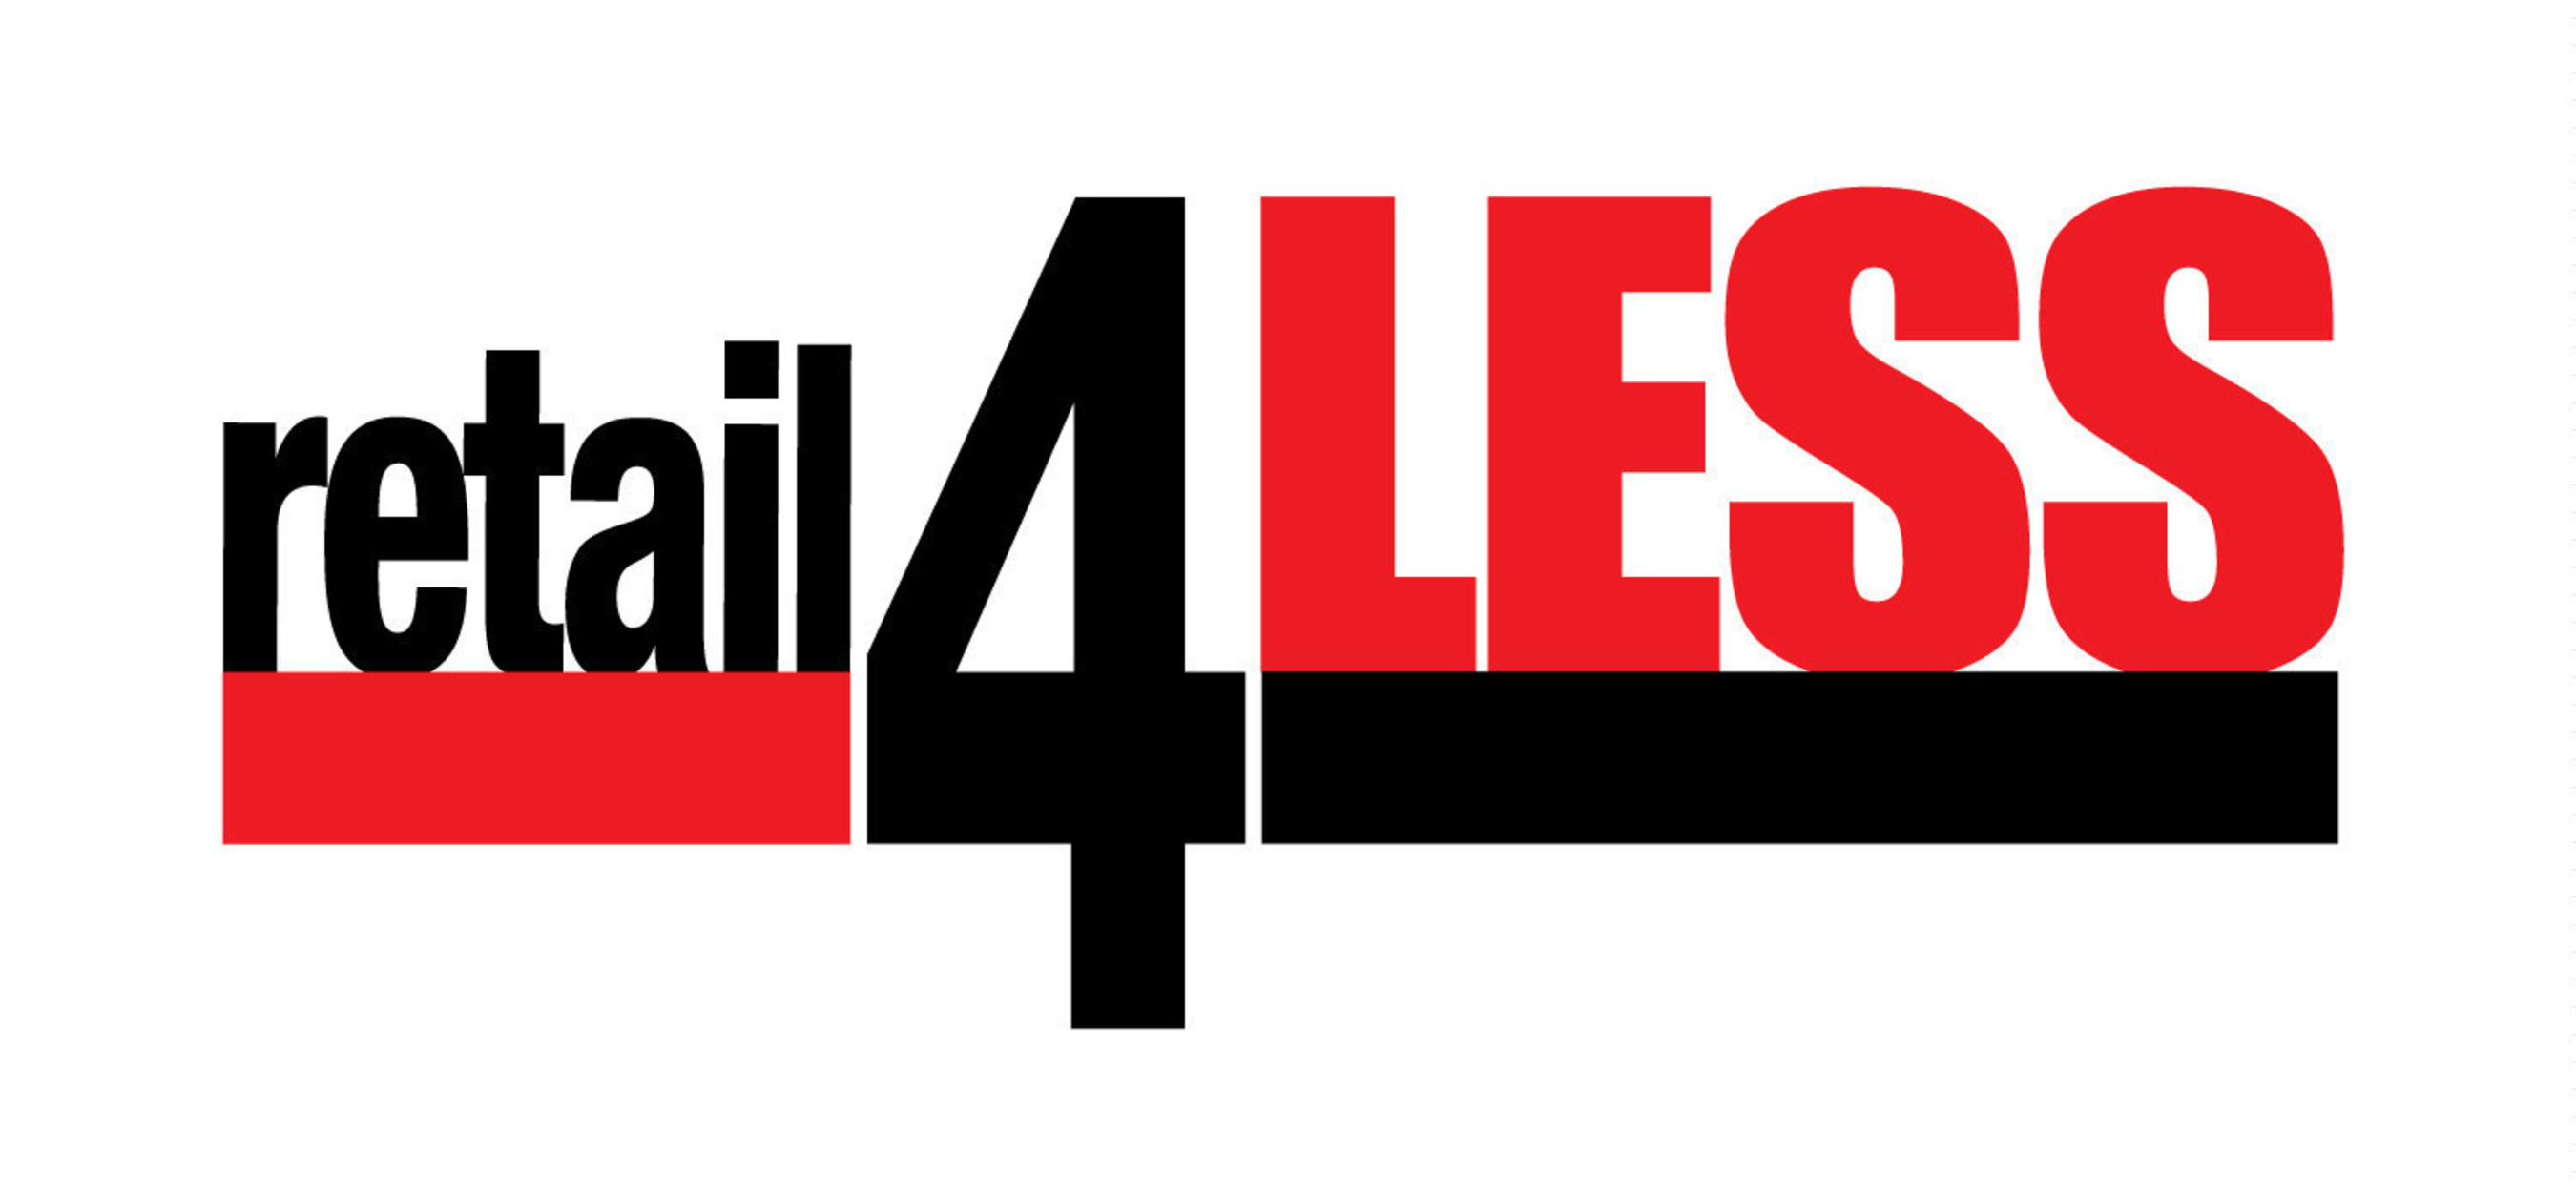 Retail4LESS Logo